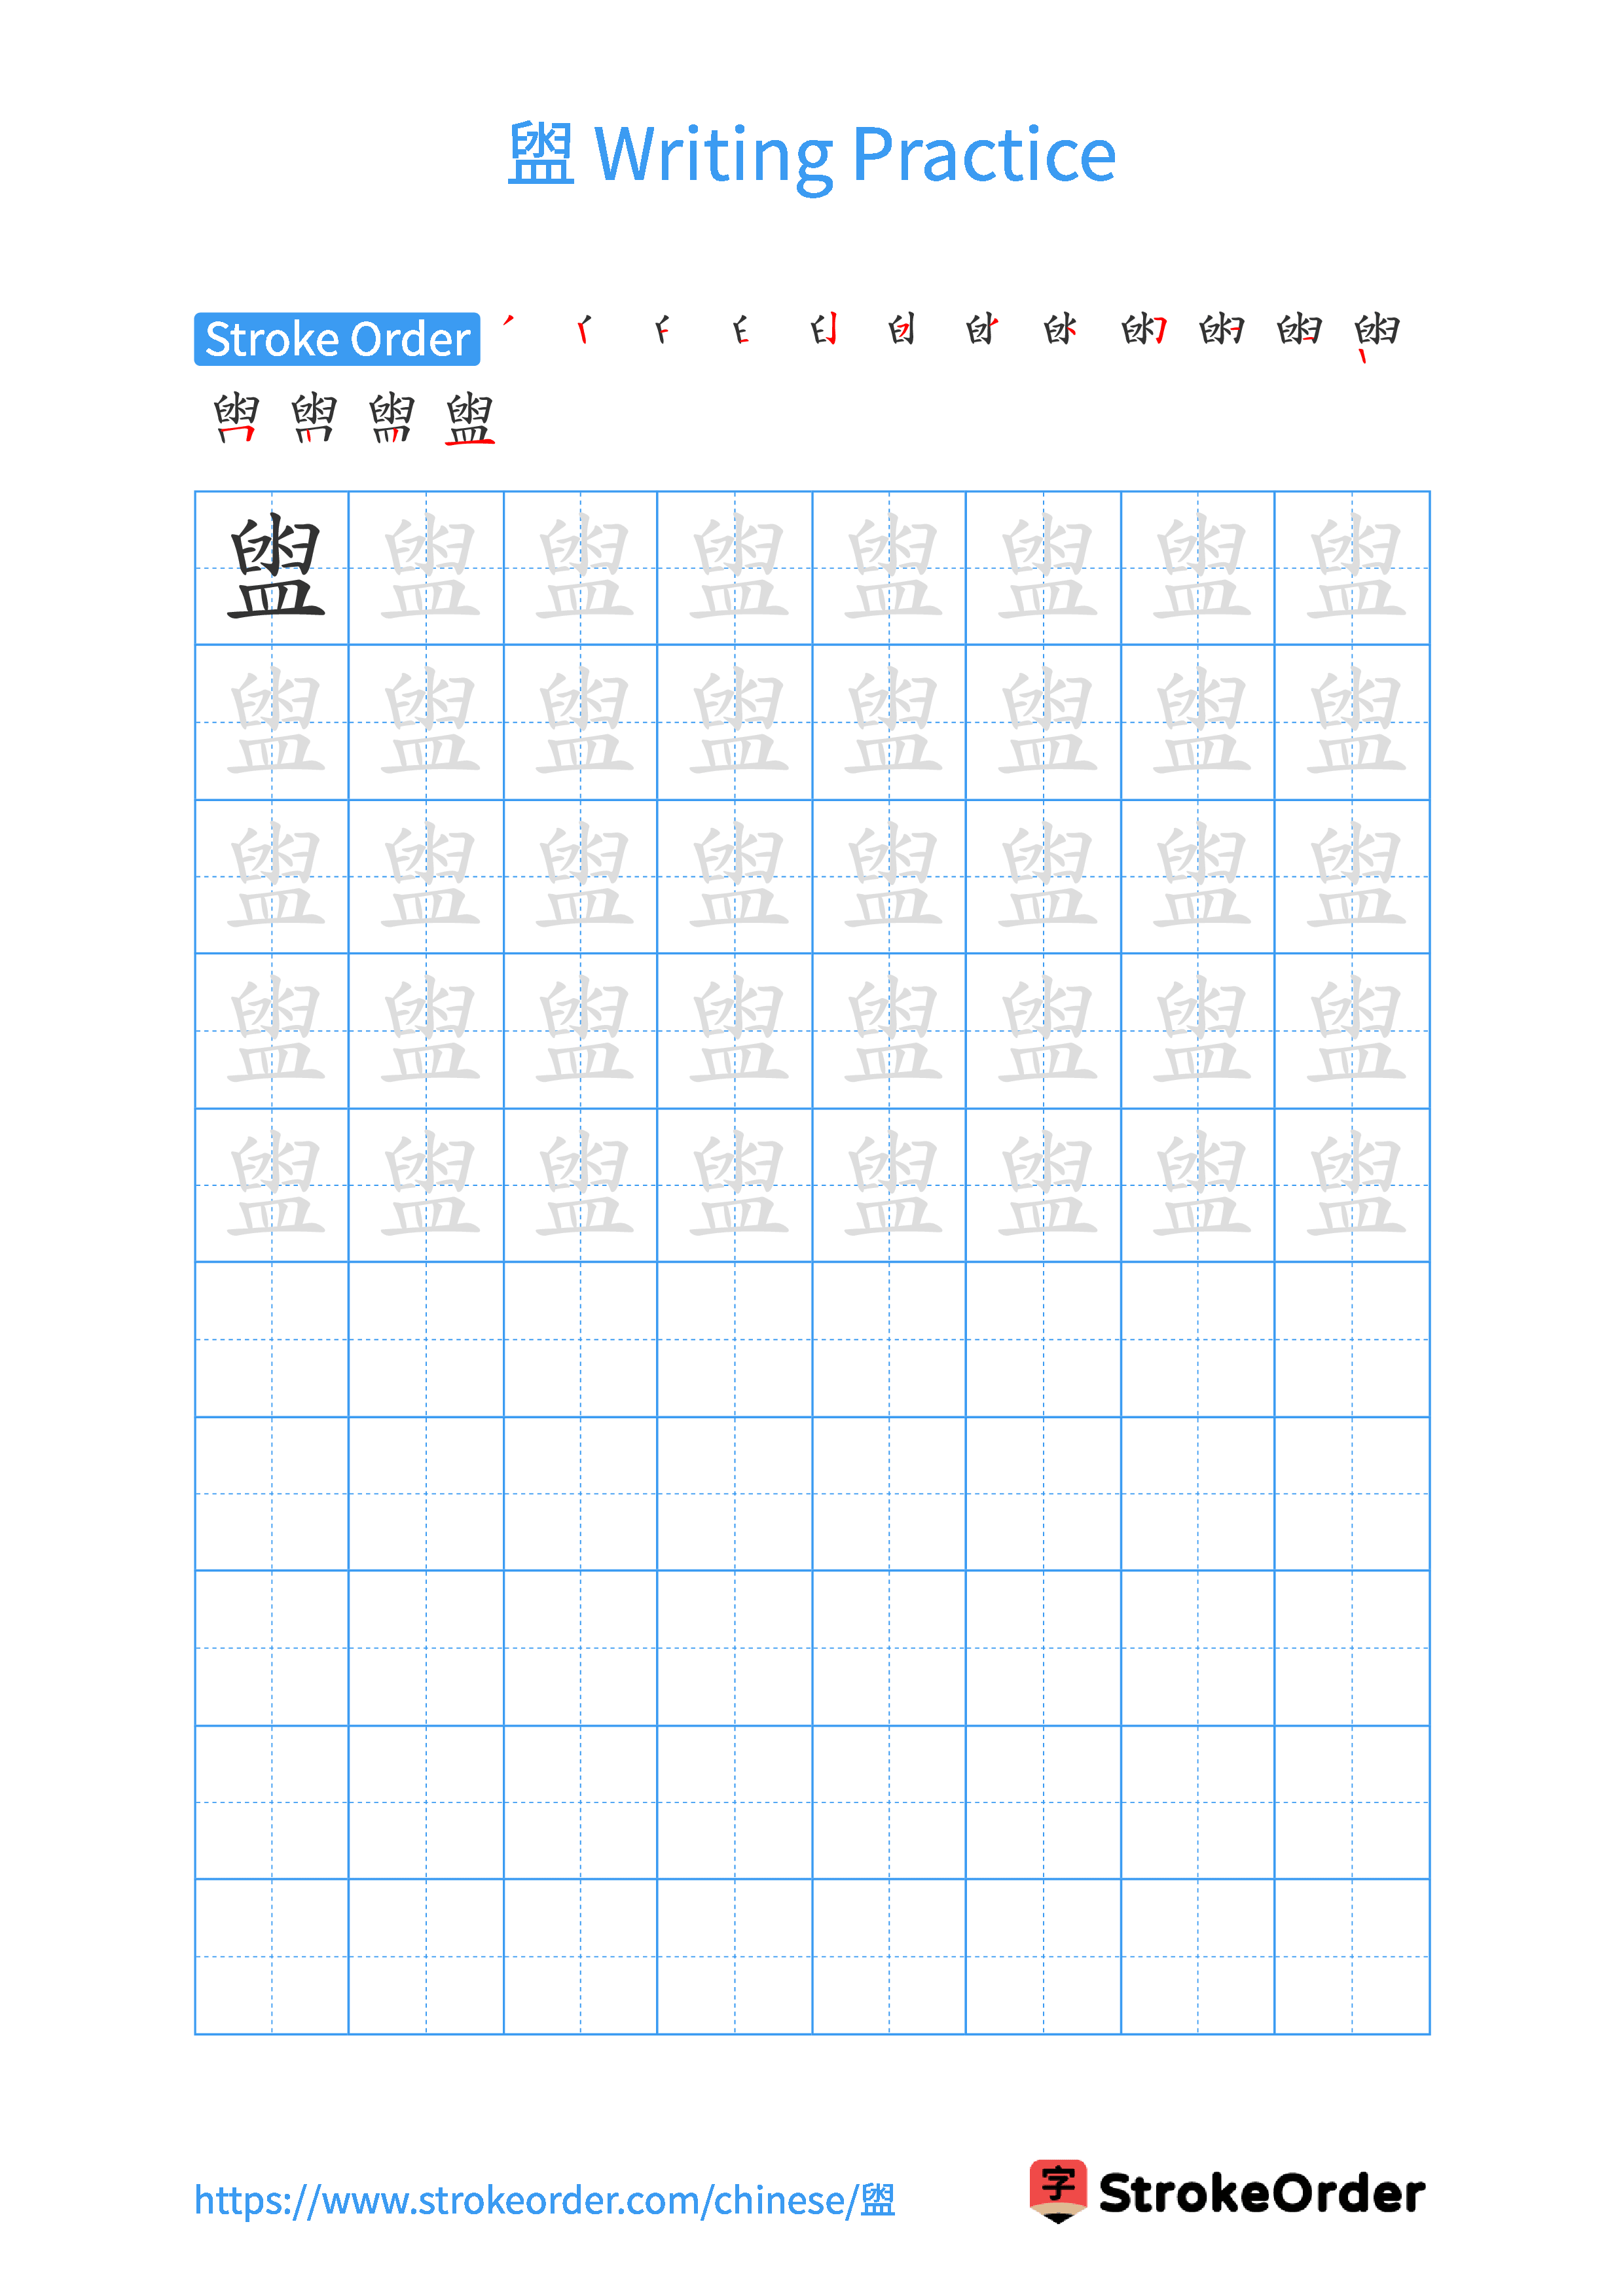 Printable Handwriting Practice Worksheet of the Chinese character 盥 in Portrait Orientation (Tian Zi Ge)